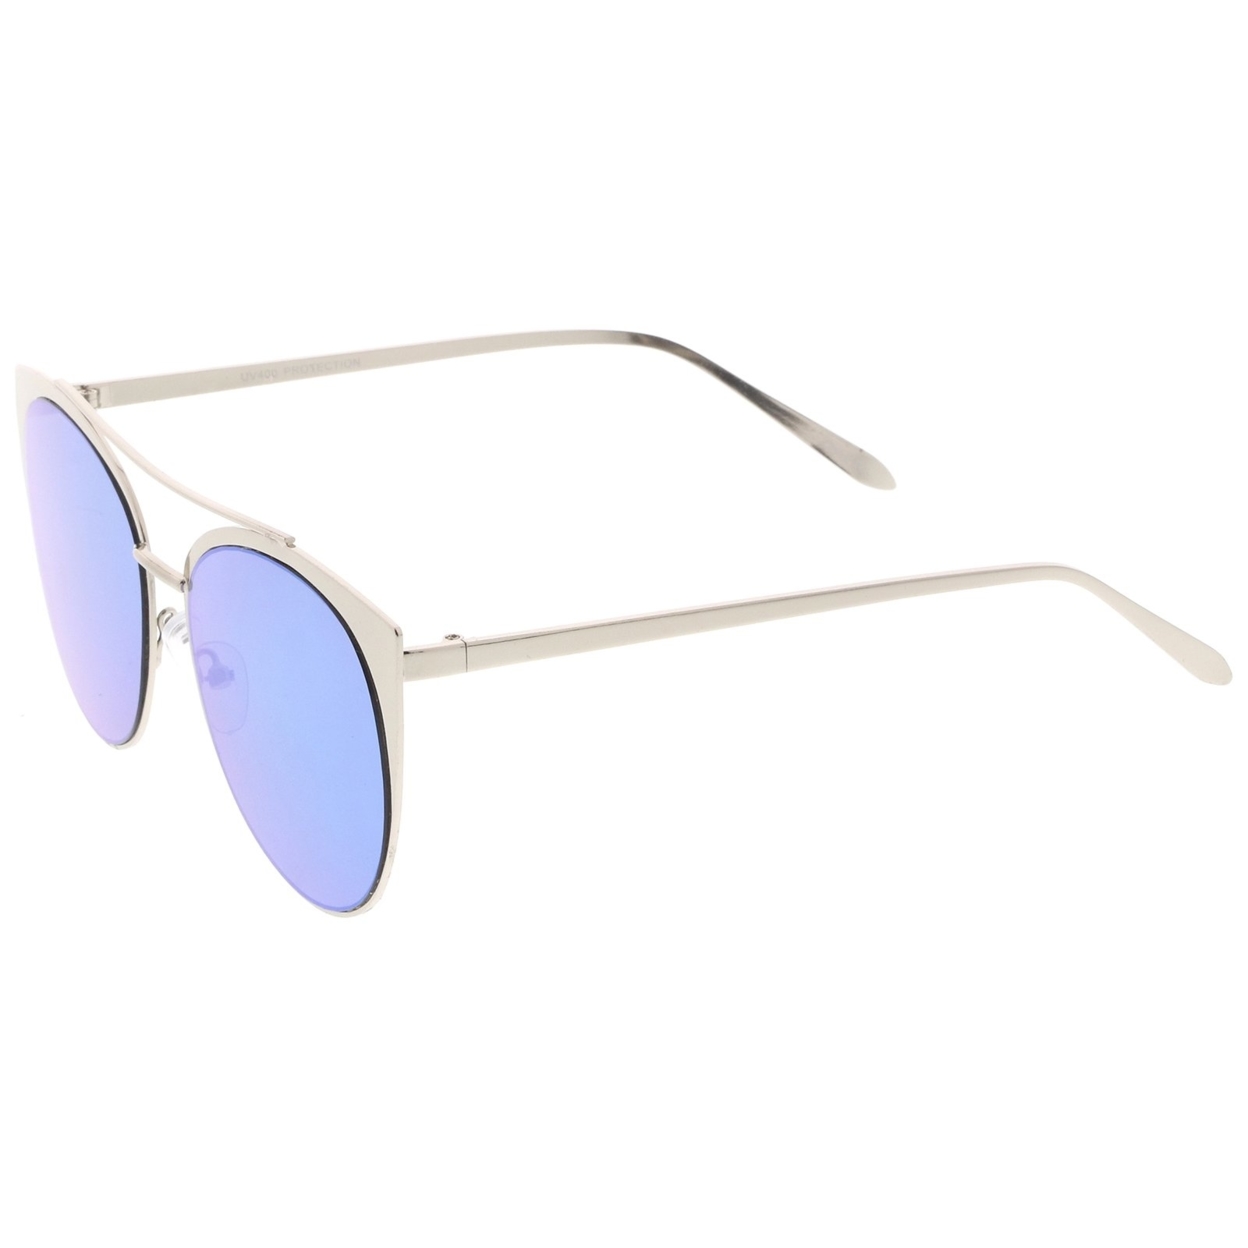 Women's Oversize Metal Crossbar Mirrored Flat Lens Cat Eye Sunglasses 61mm - Shiny Silver / Silver Mirror